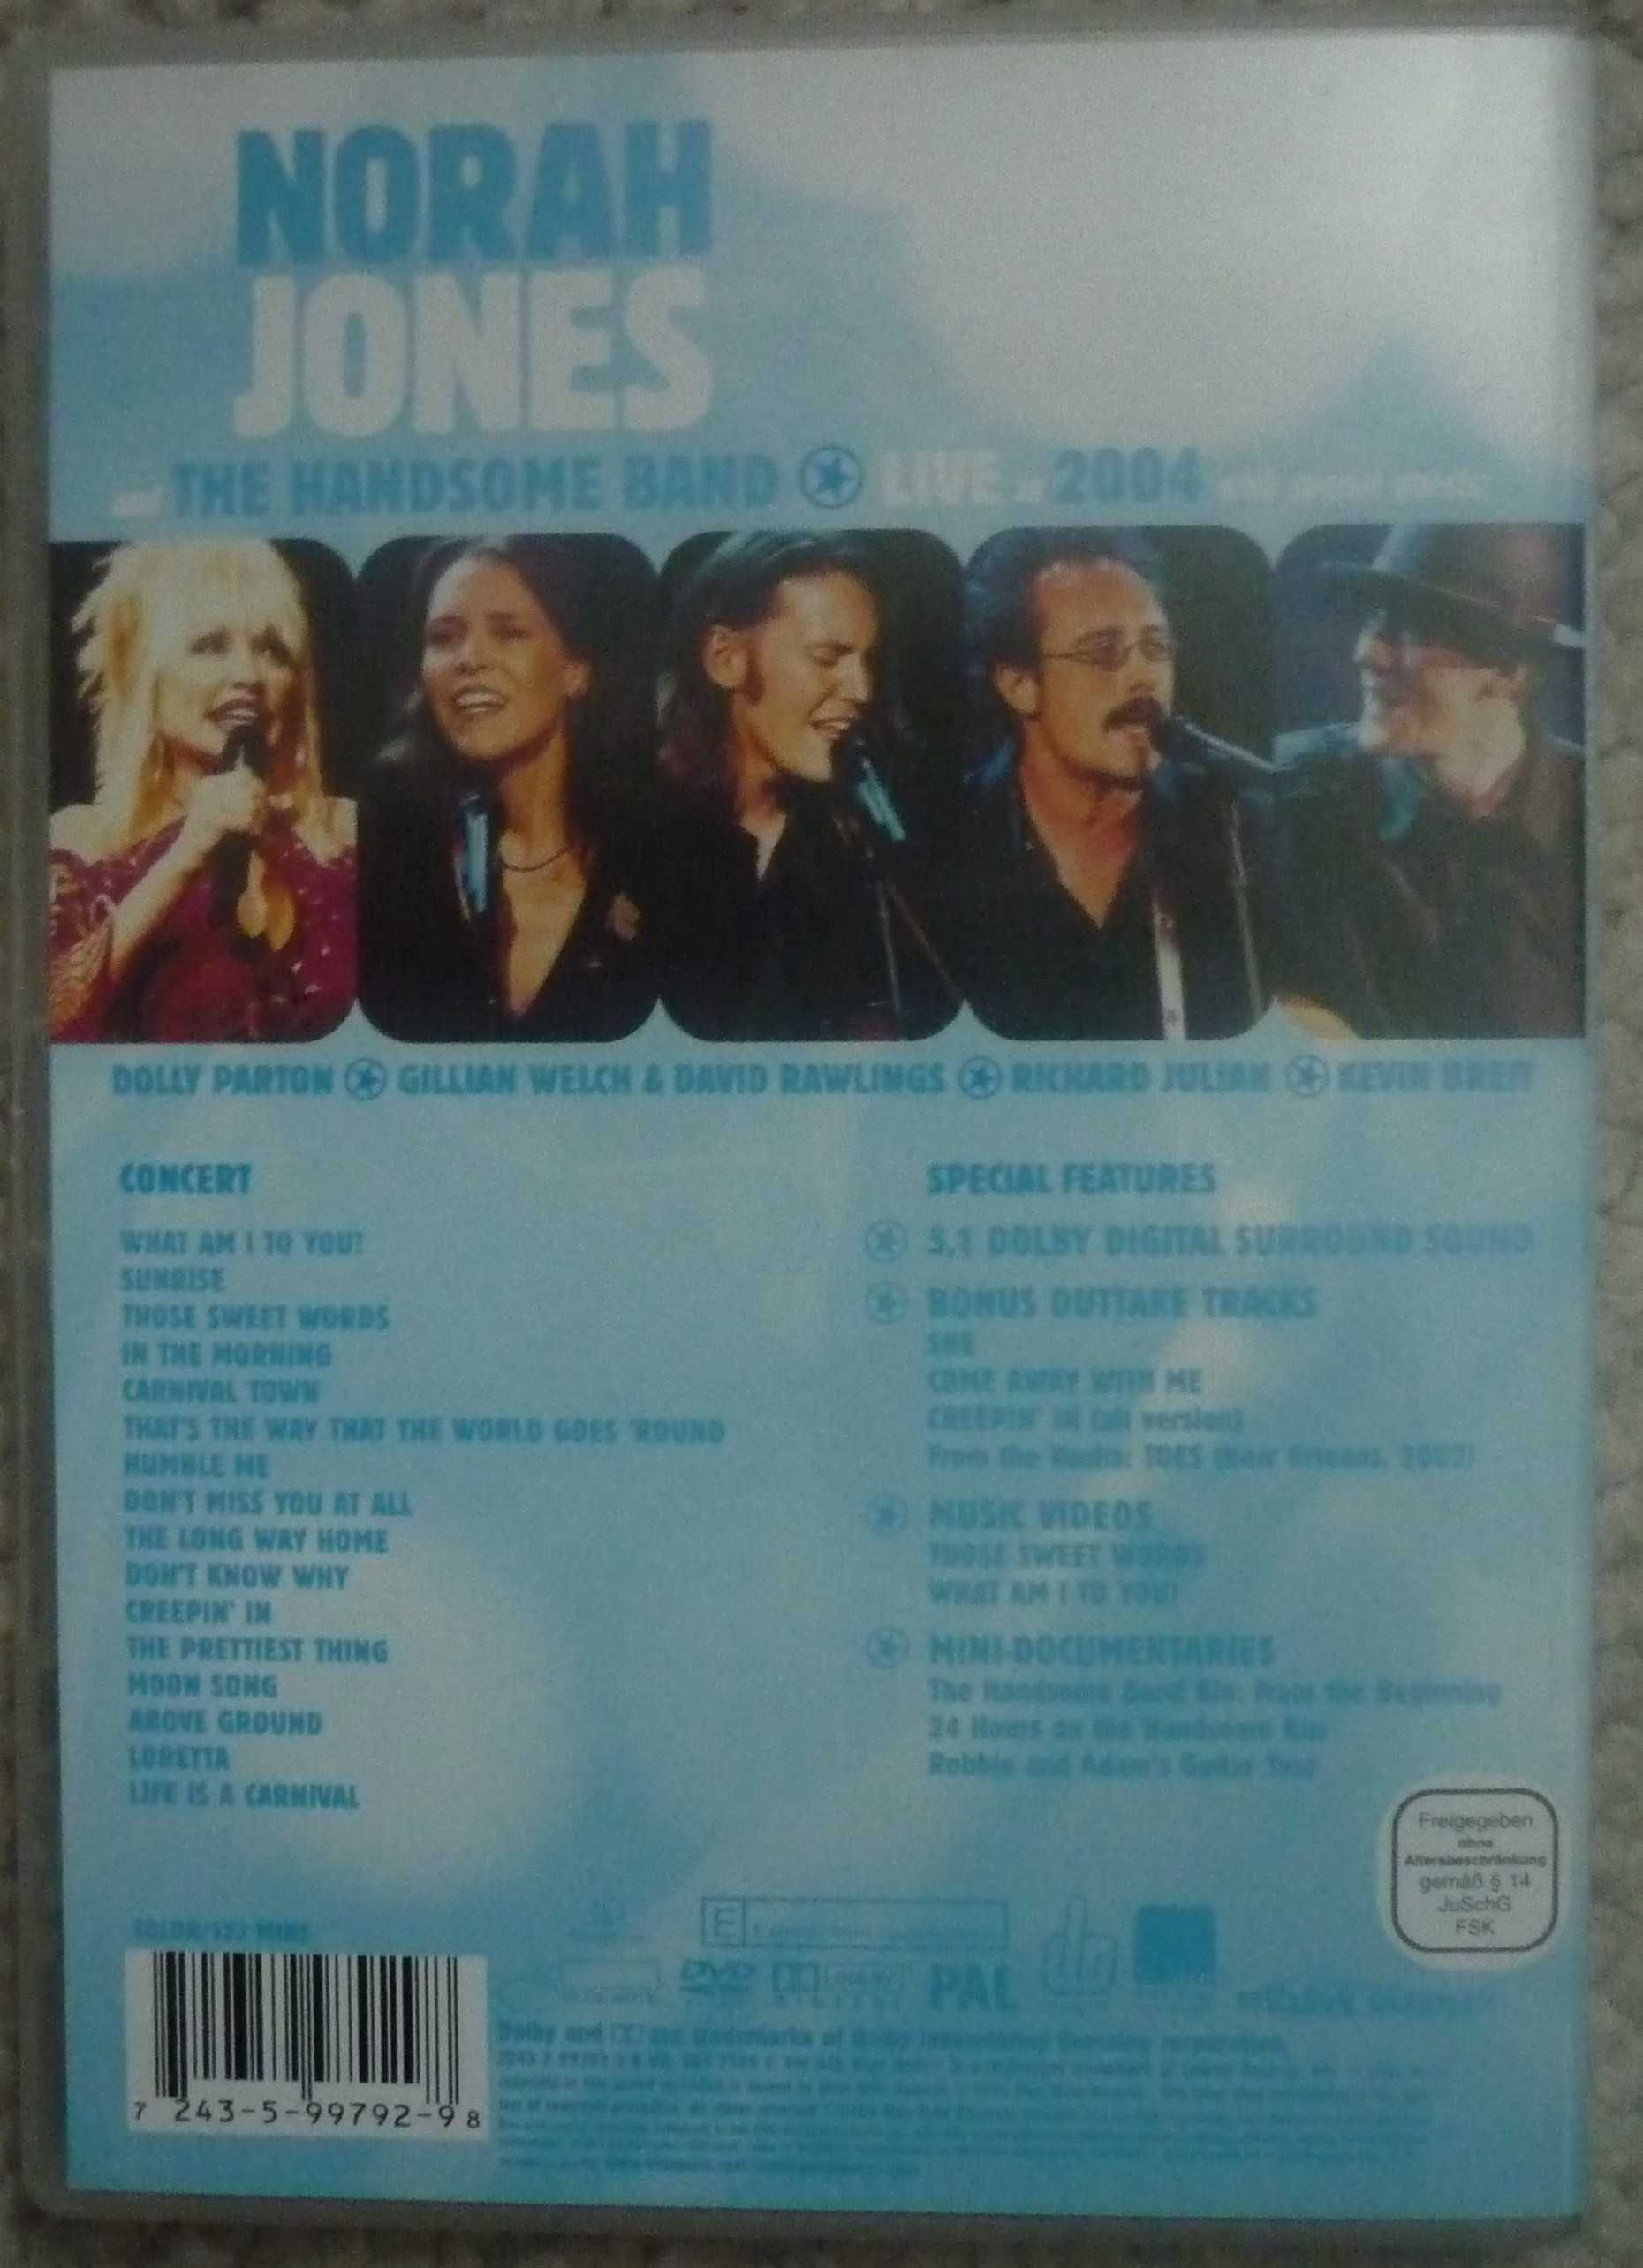 NORAH JONES – The Handsome Band DVD Live 2004  koncert DVD